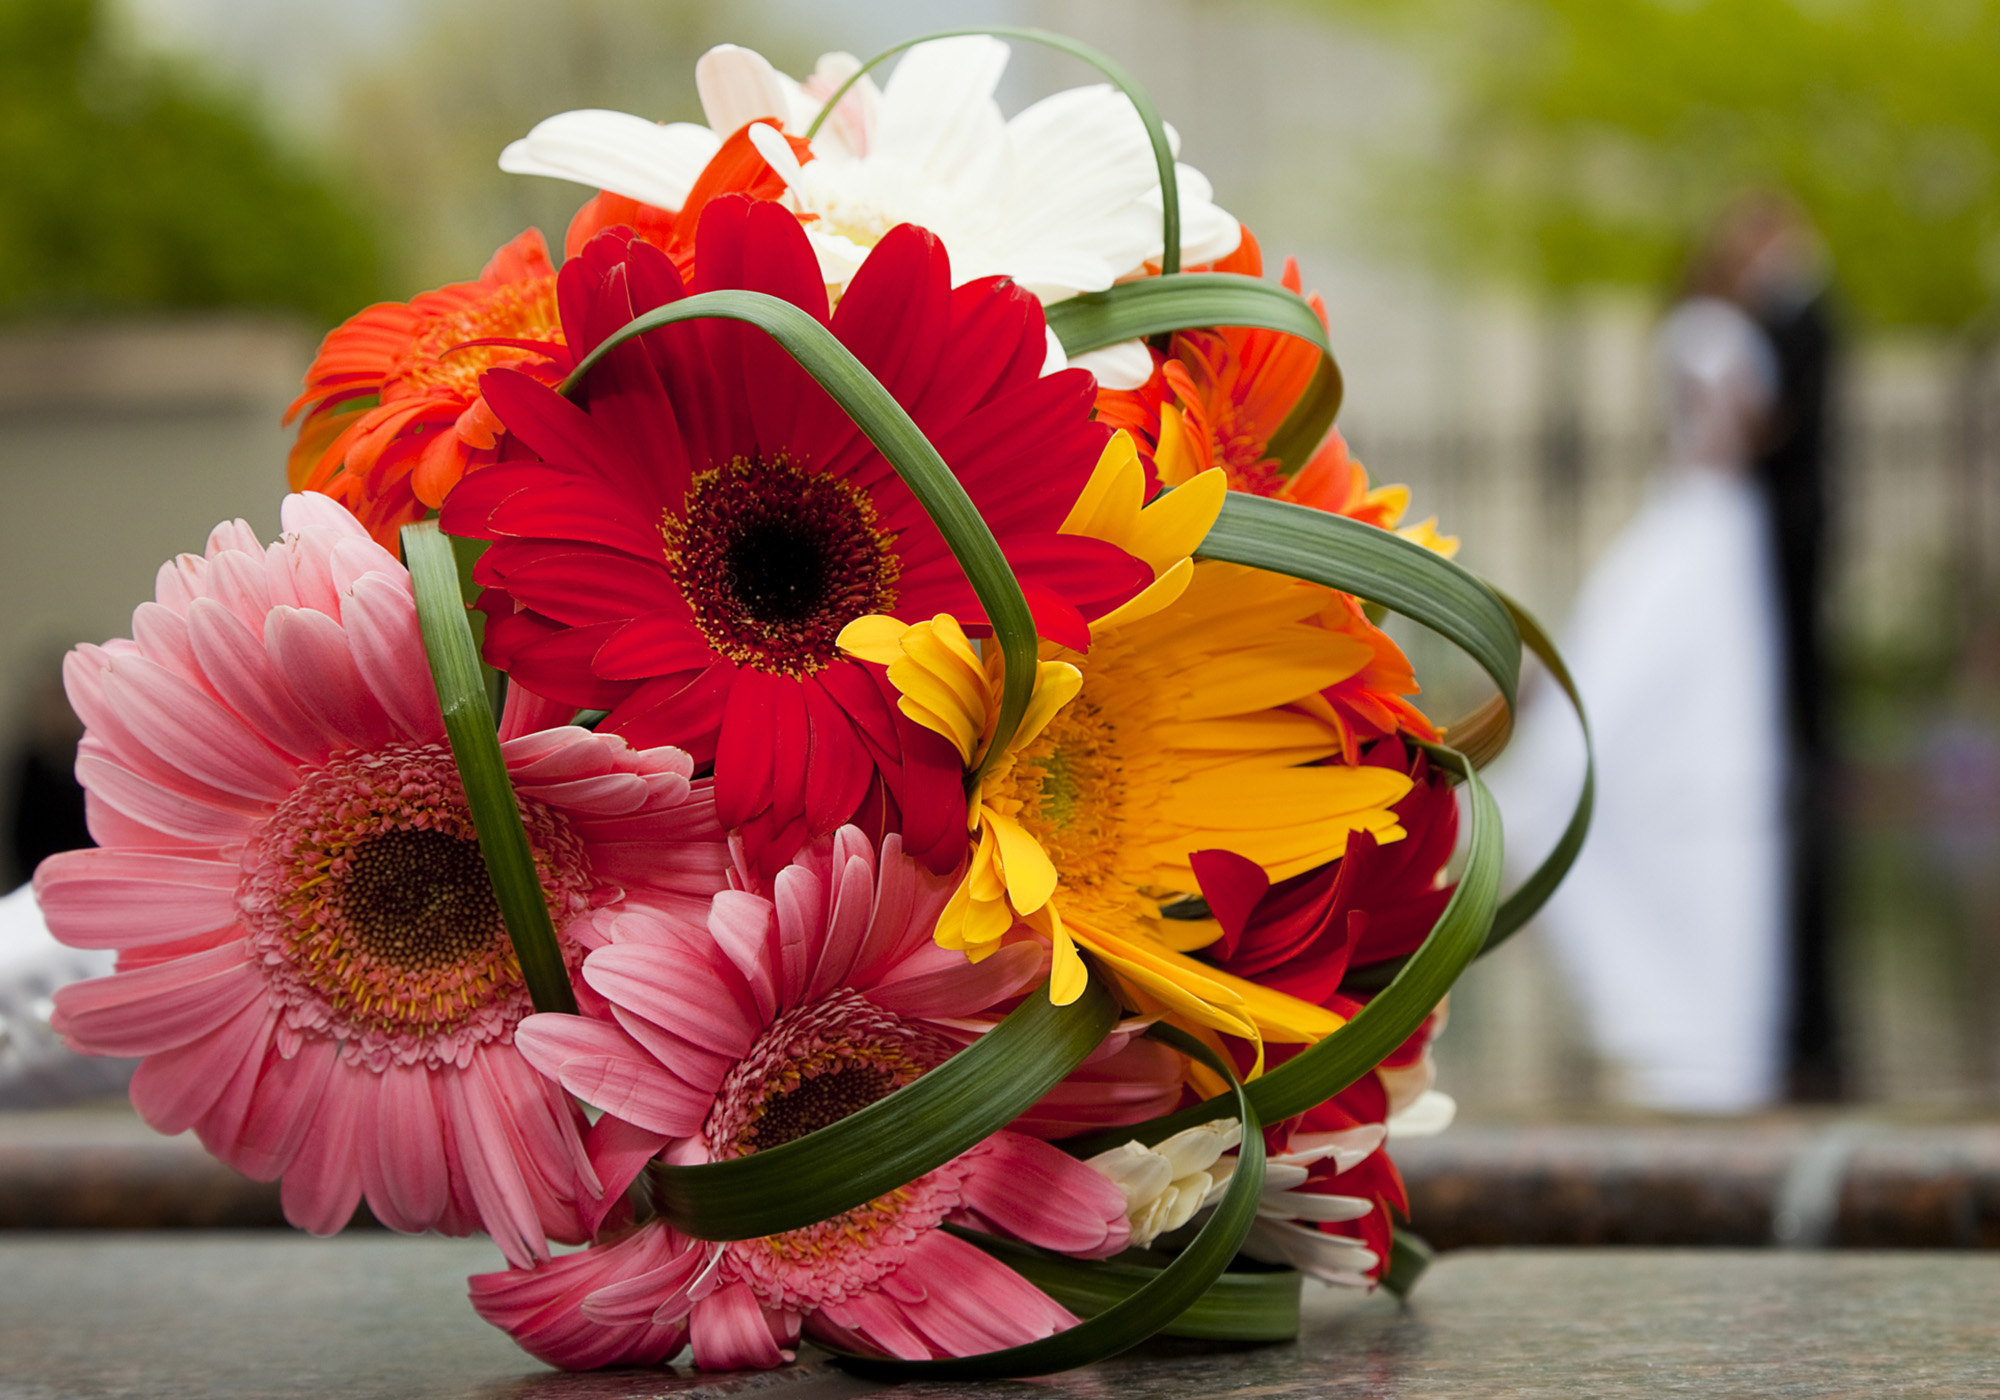 choose daisy wedding bouquet for your wedding 4 - Choose Daisy Wedding Bouquet for Your Wedding